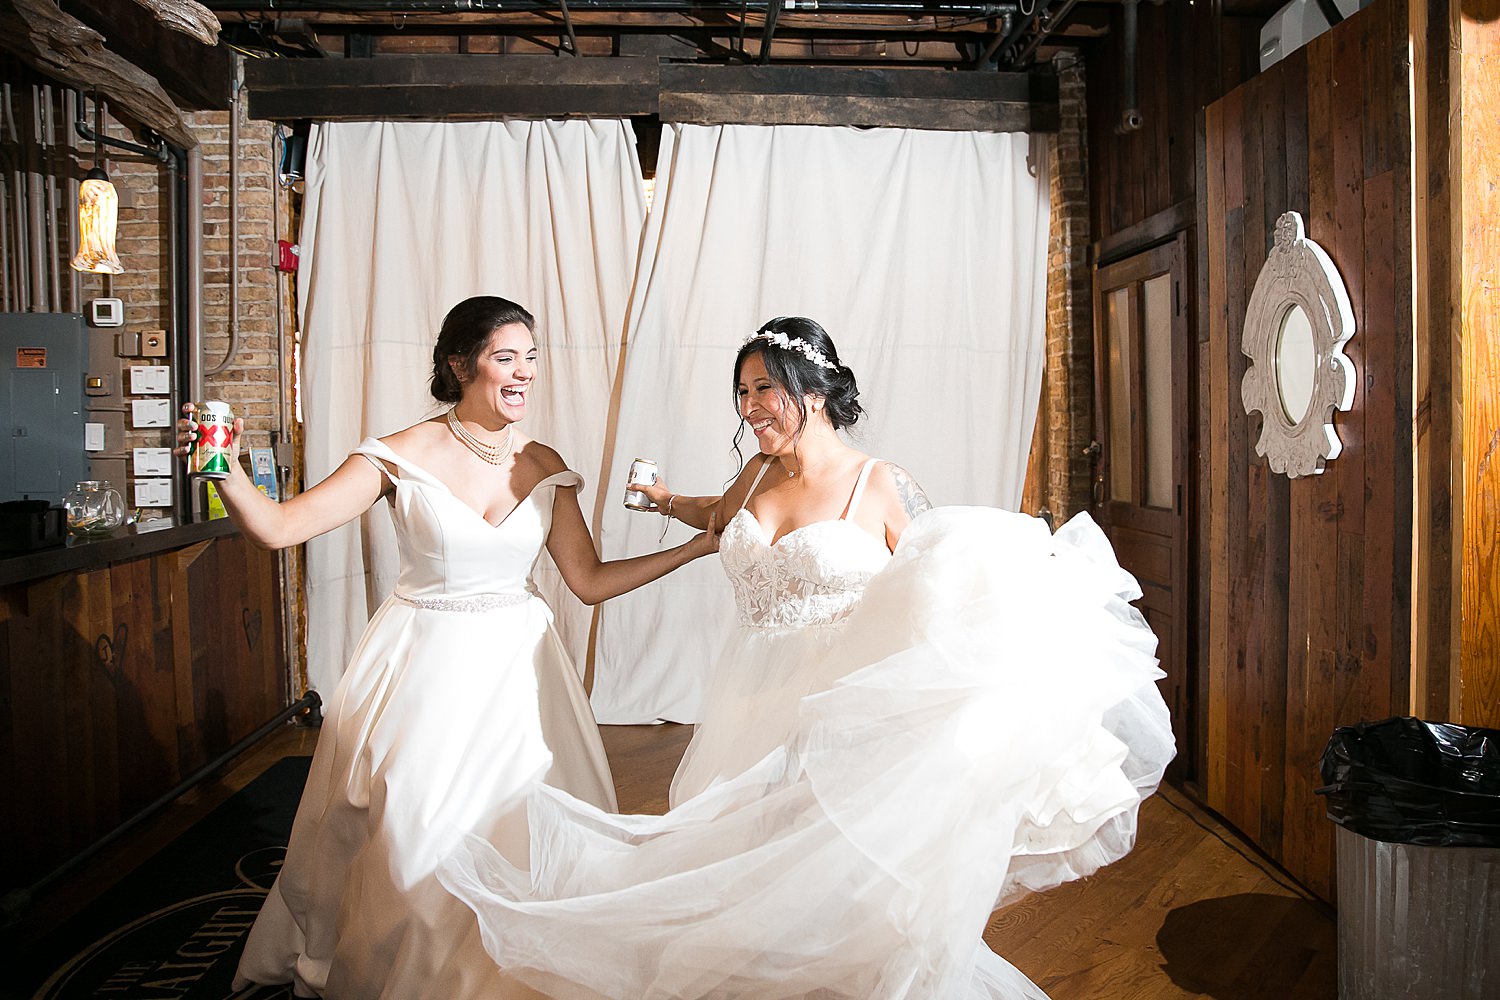 Brides dance into their wedding reception.